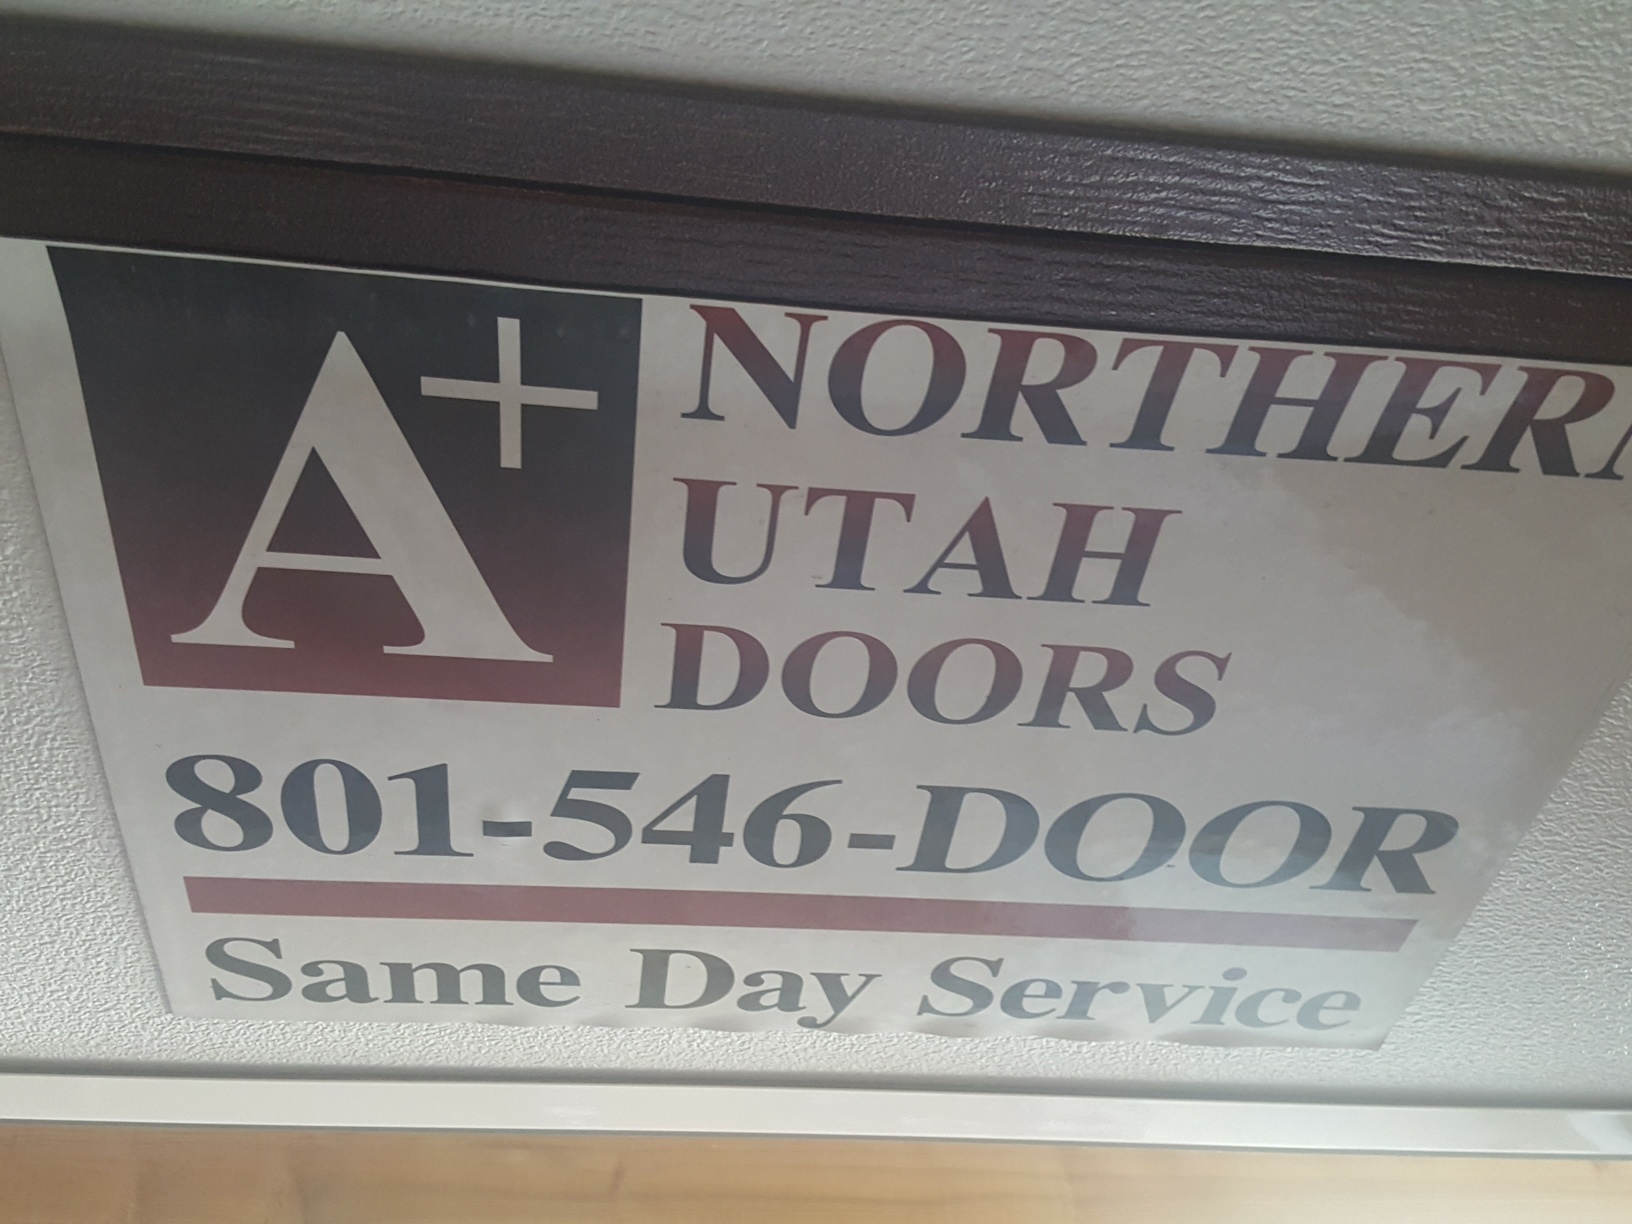 A+ Northern Utah Doors Photo